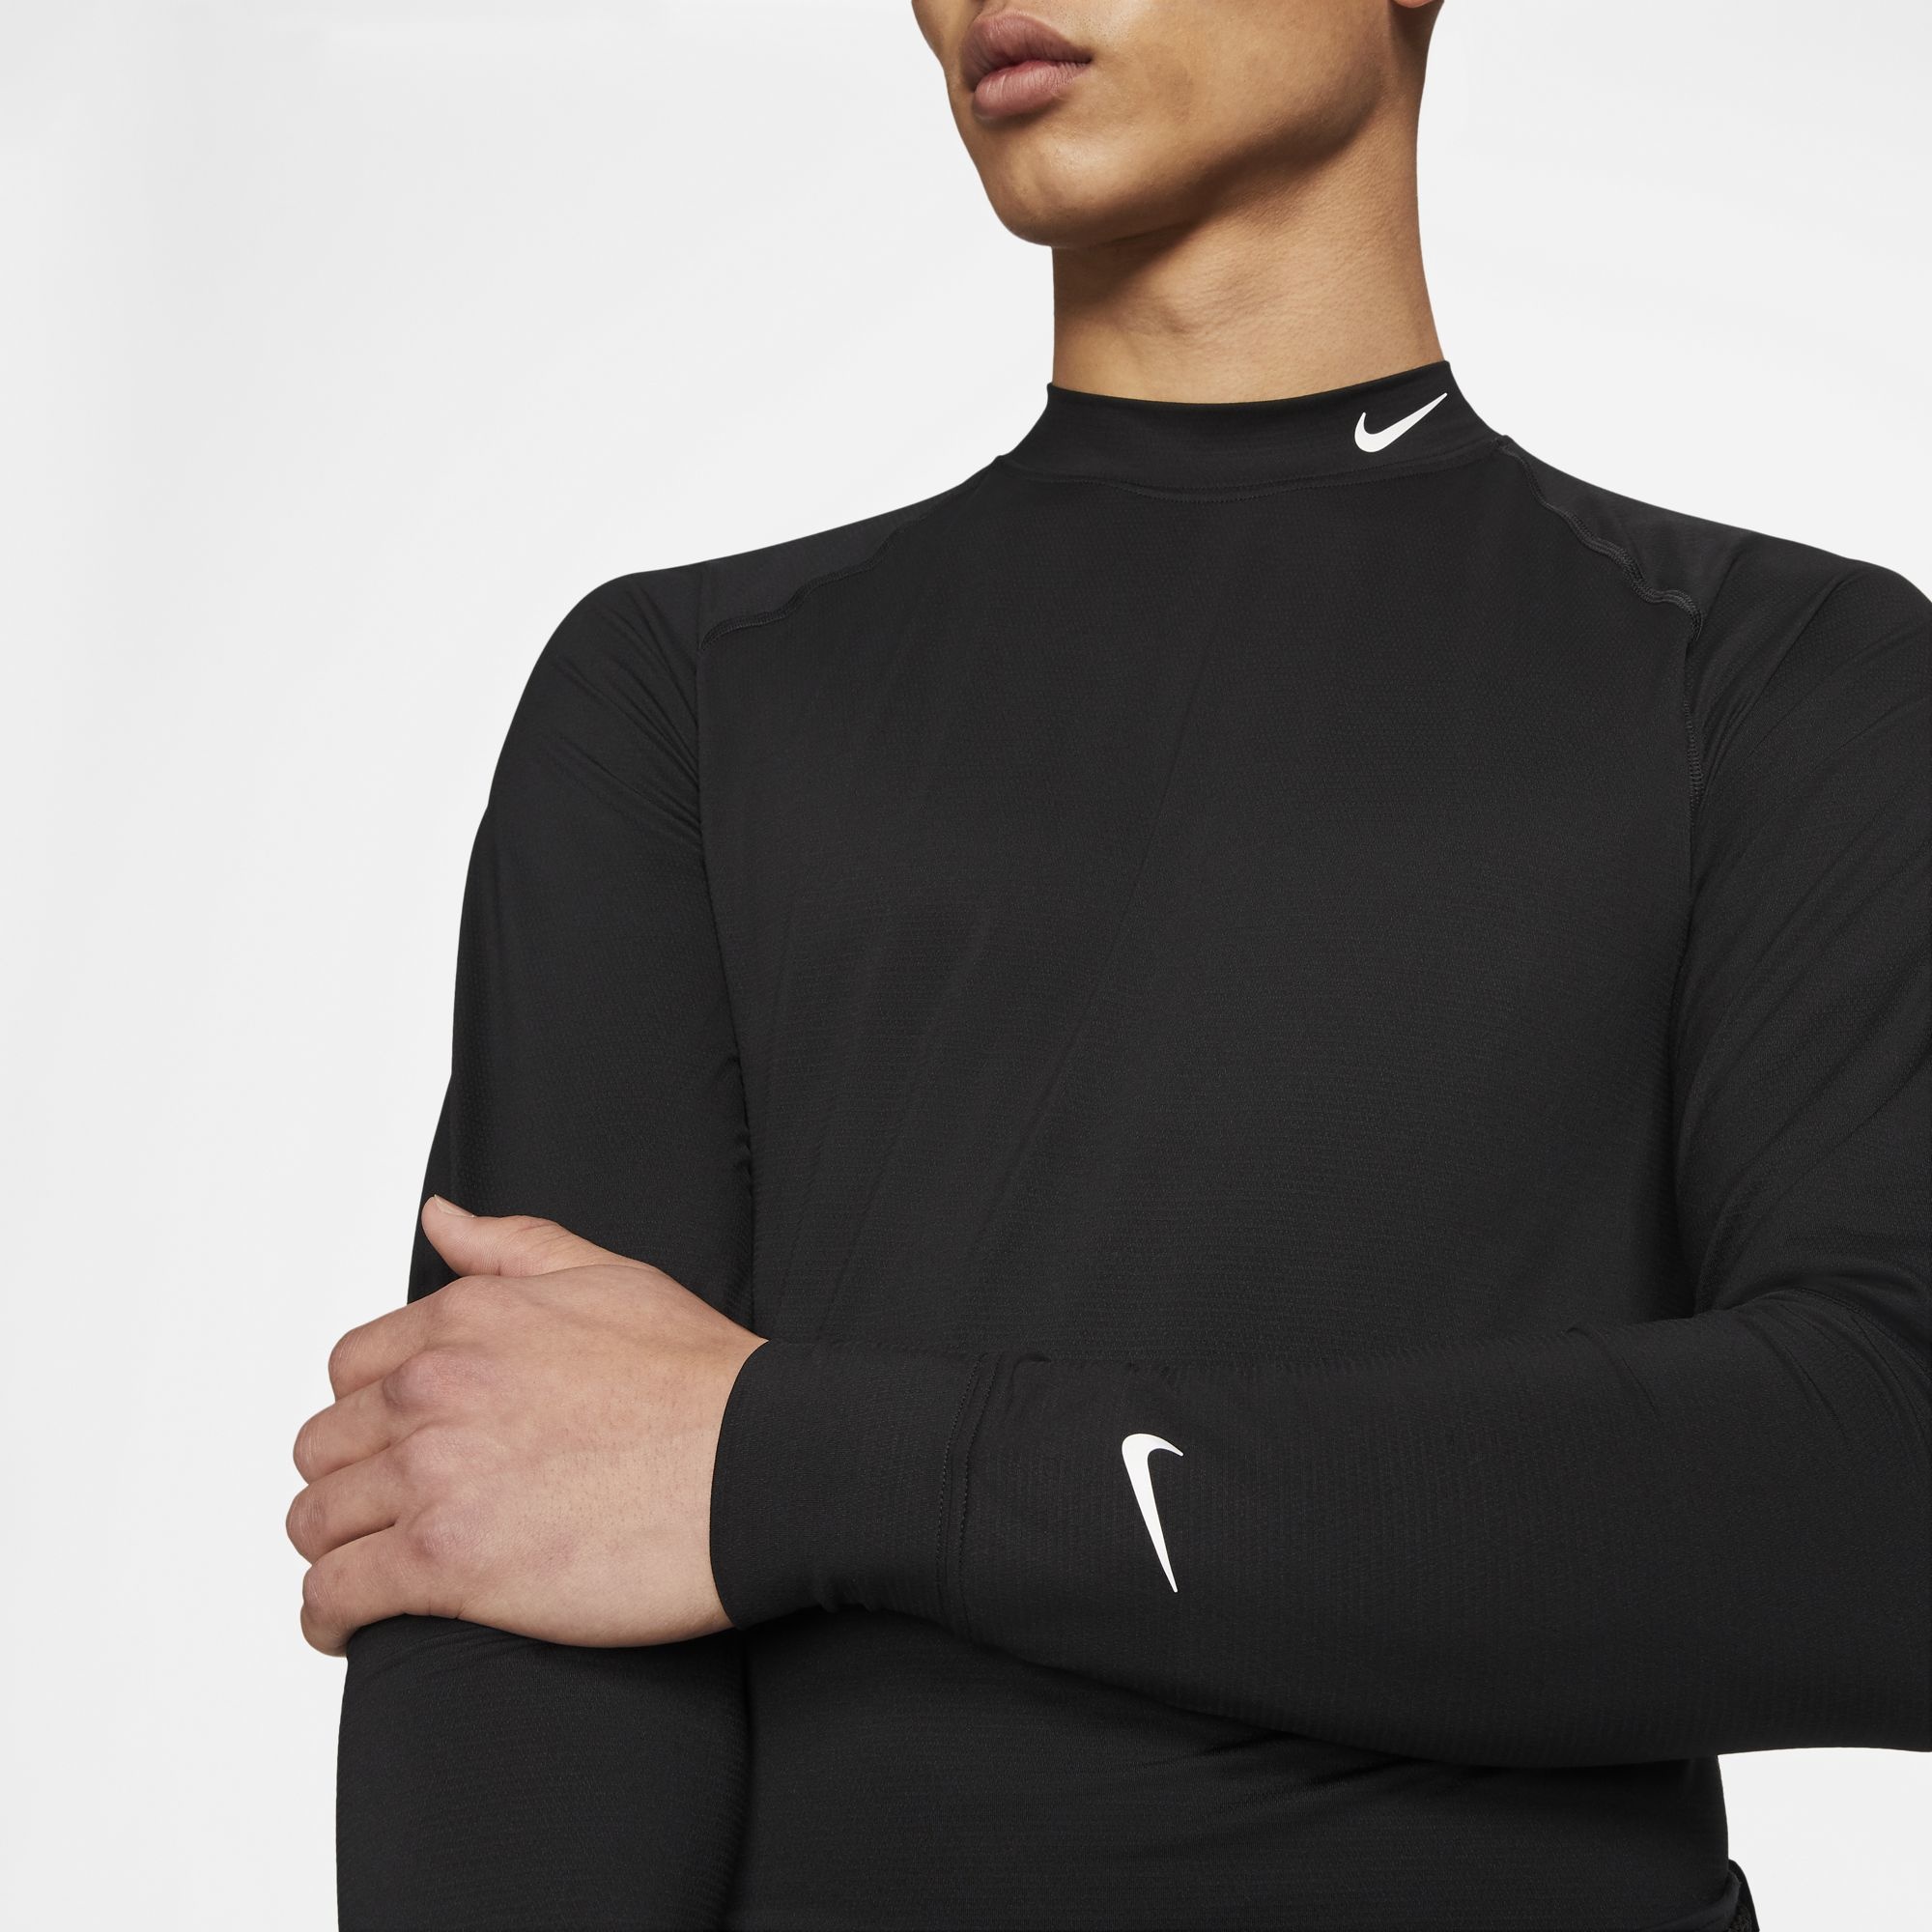 Nike | CU9802-010 | Dri Fit UV Vapor Long Sleeve top | Black